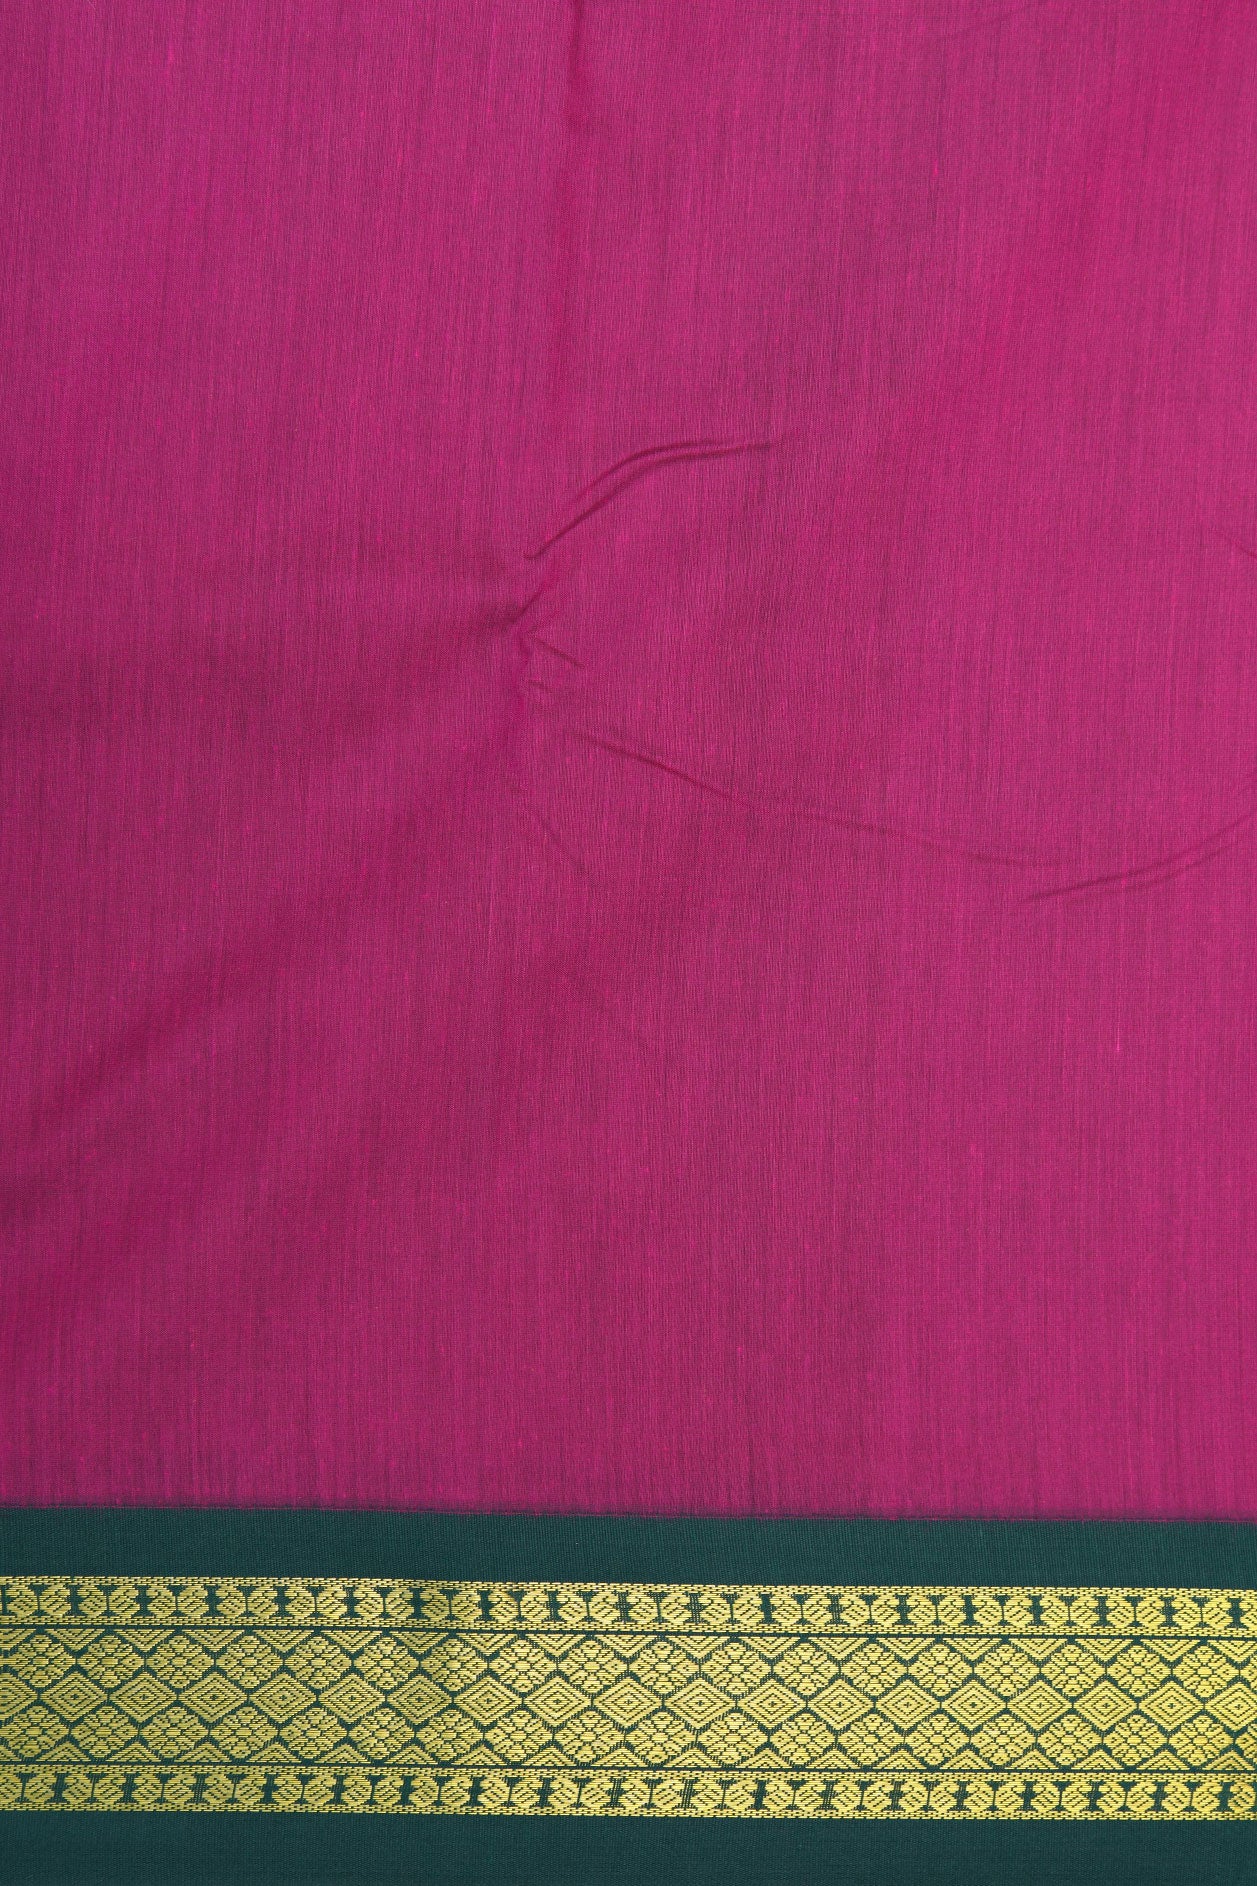 Contrast Zari Border In Plain Magenta Pink Apoorva Cotton Saree